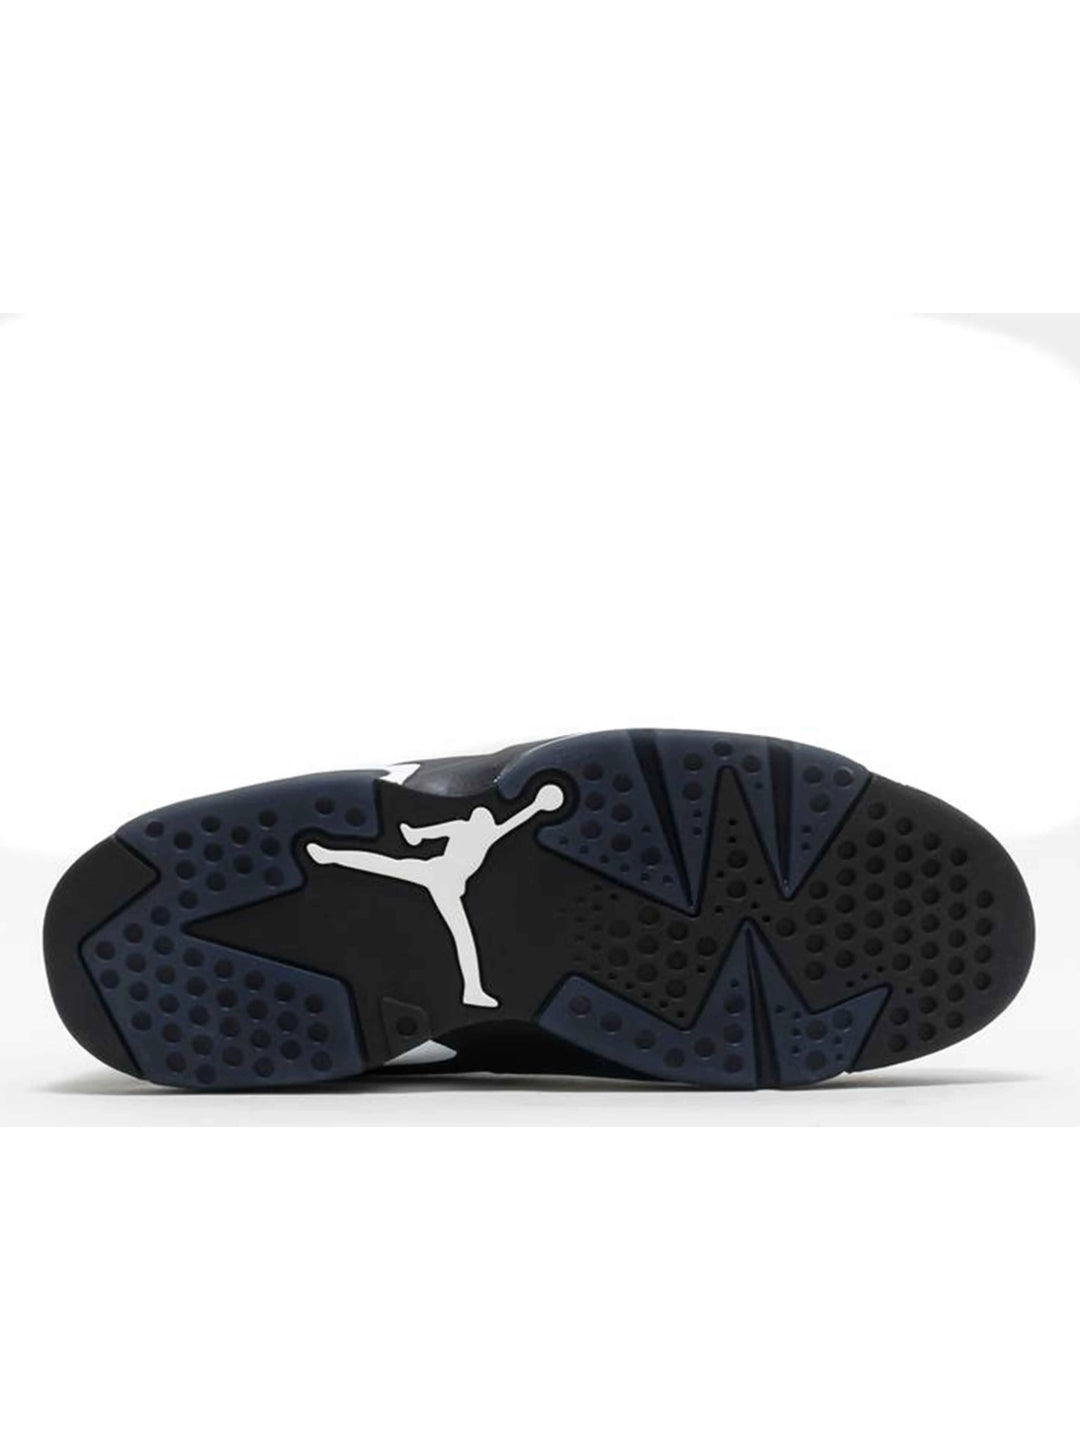 Nike Air Jordan 6 Retro Black Cat Jordan Brand